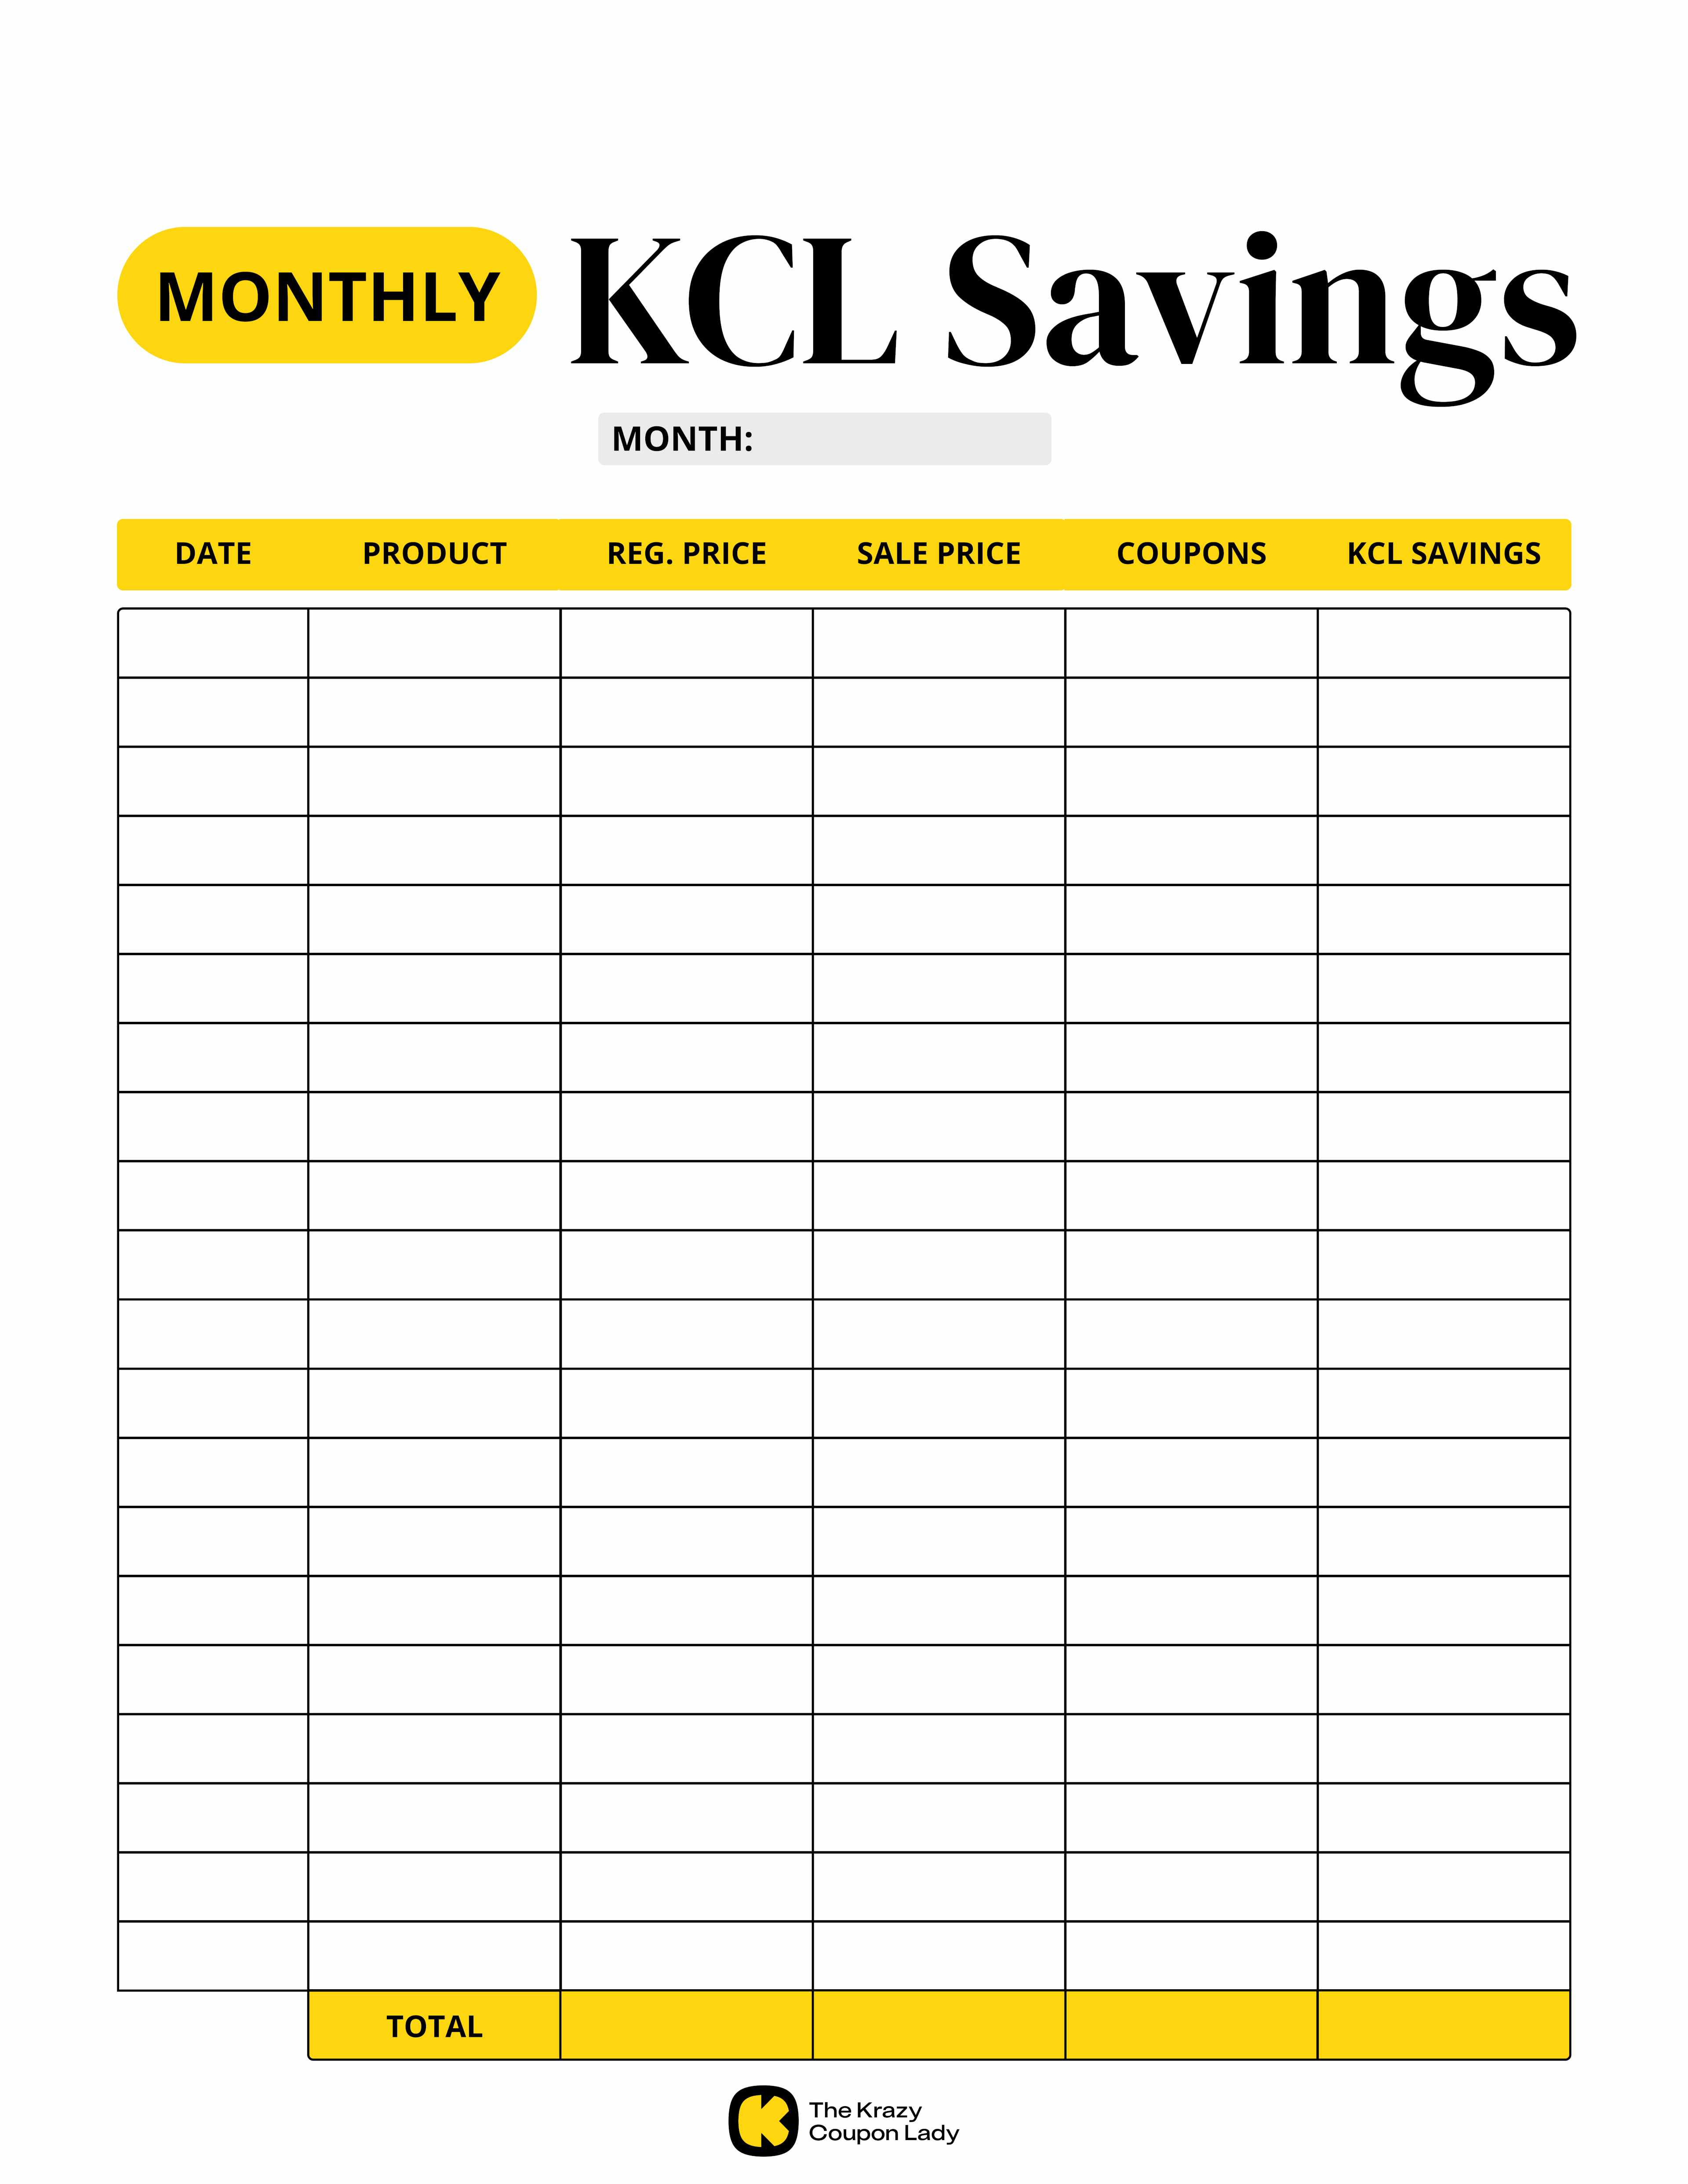 Monthly KCL Savings printable